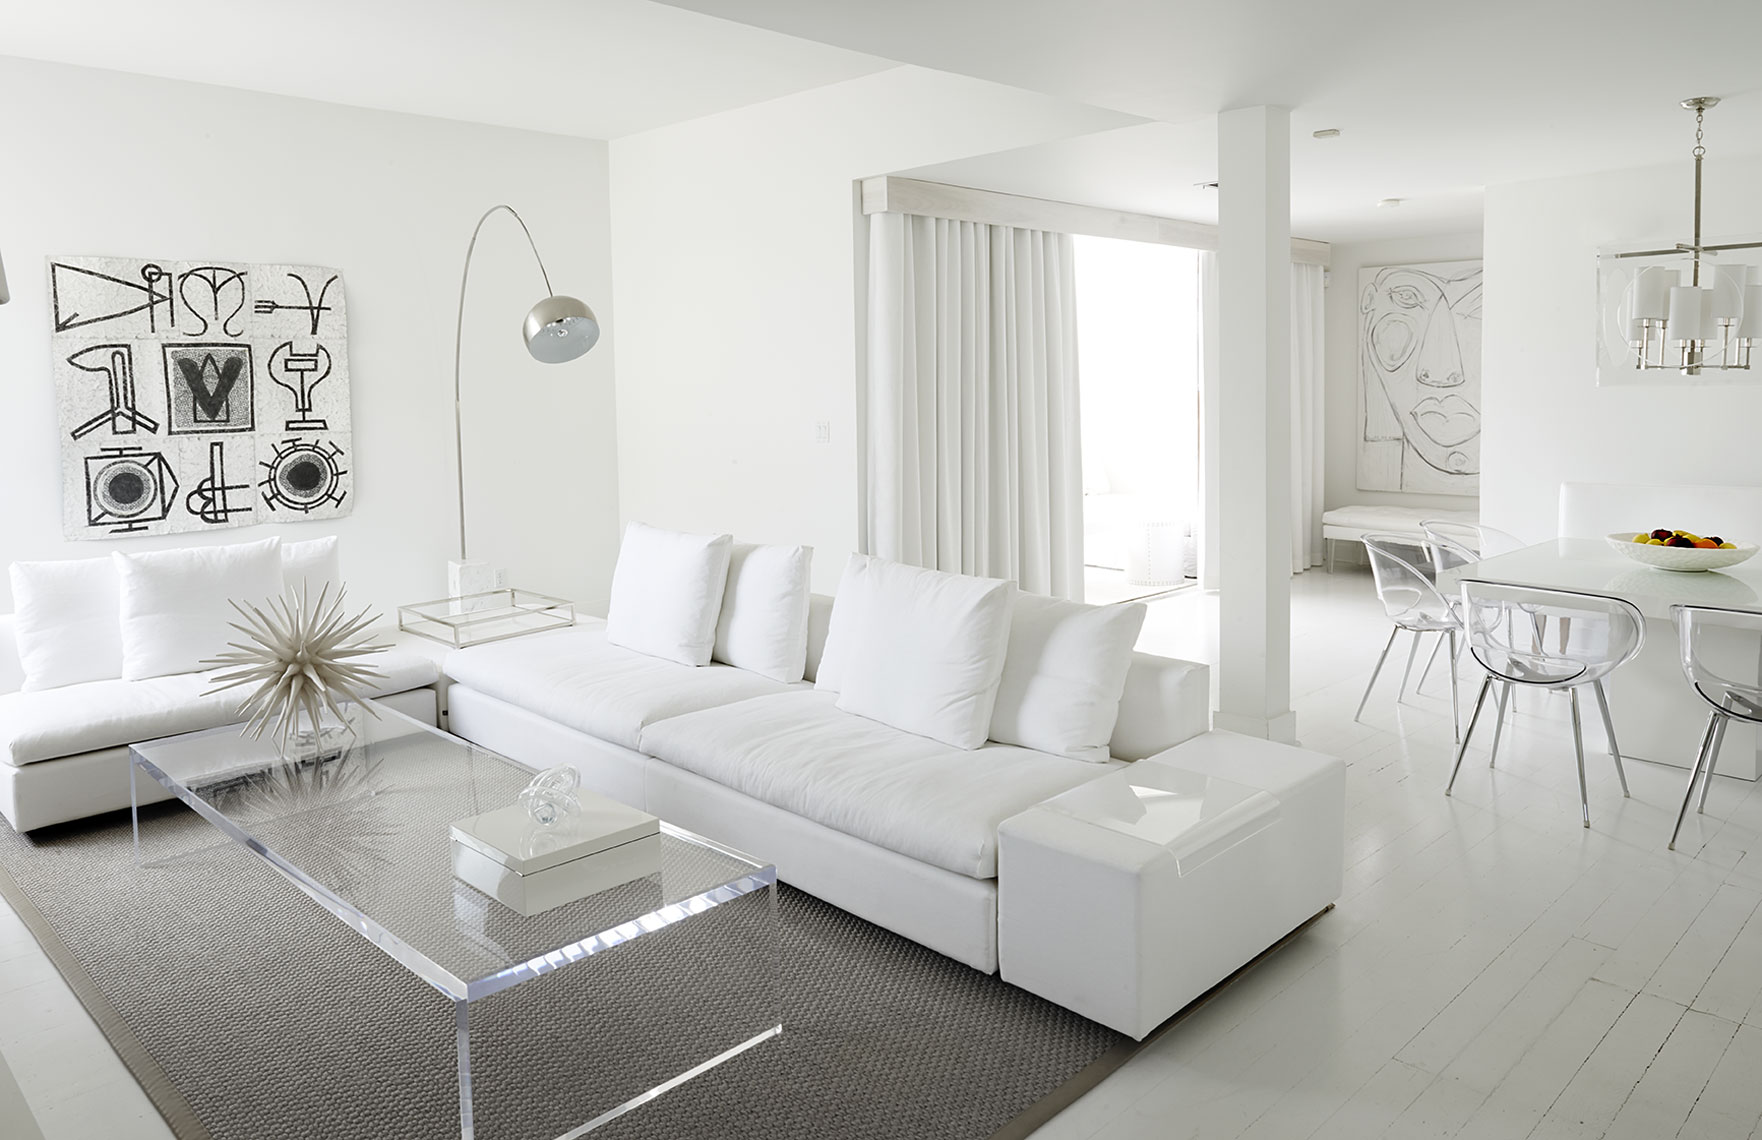 Villa Vicci bright white interiors by Alison Gootee Photography